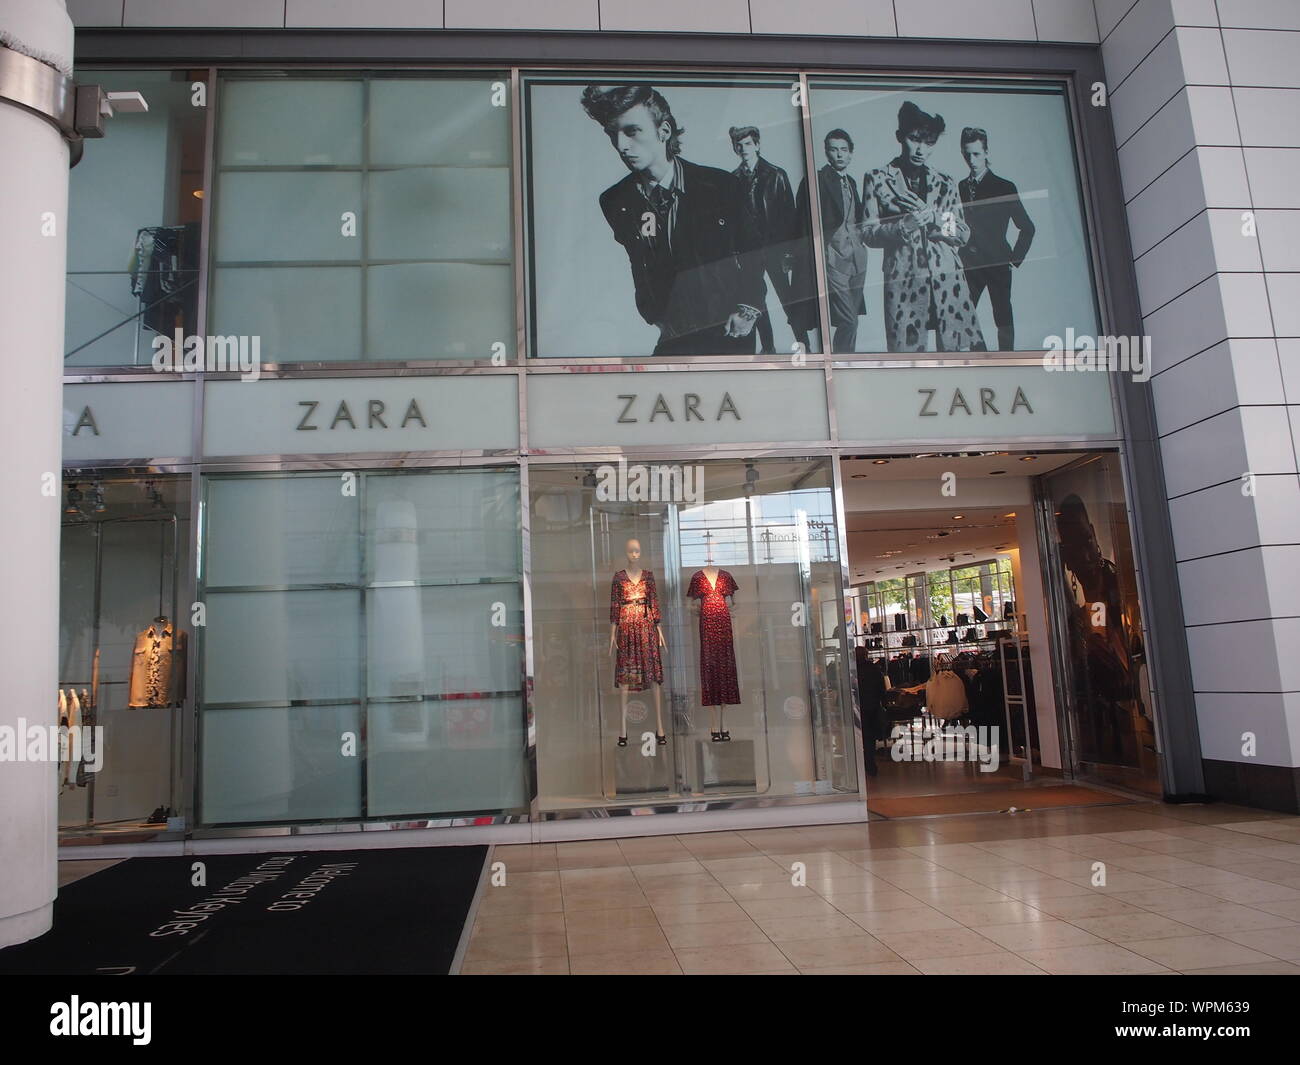 Zara store in Intu shopping centre, Milton Keynes, UK Stock Photo - Alamy